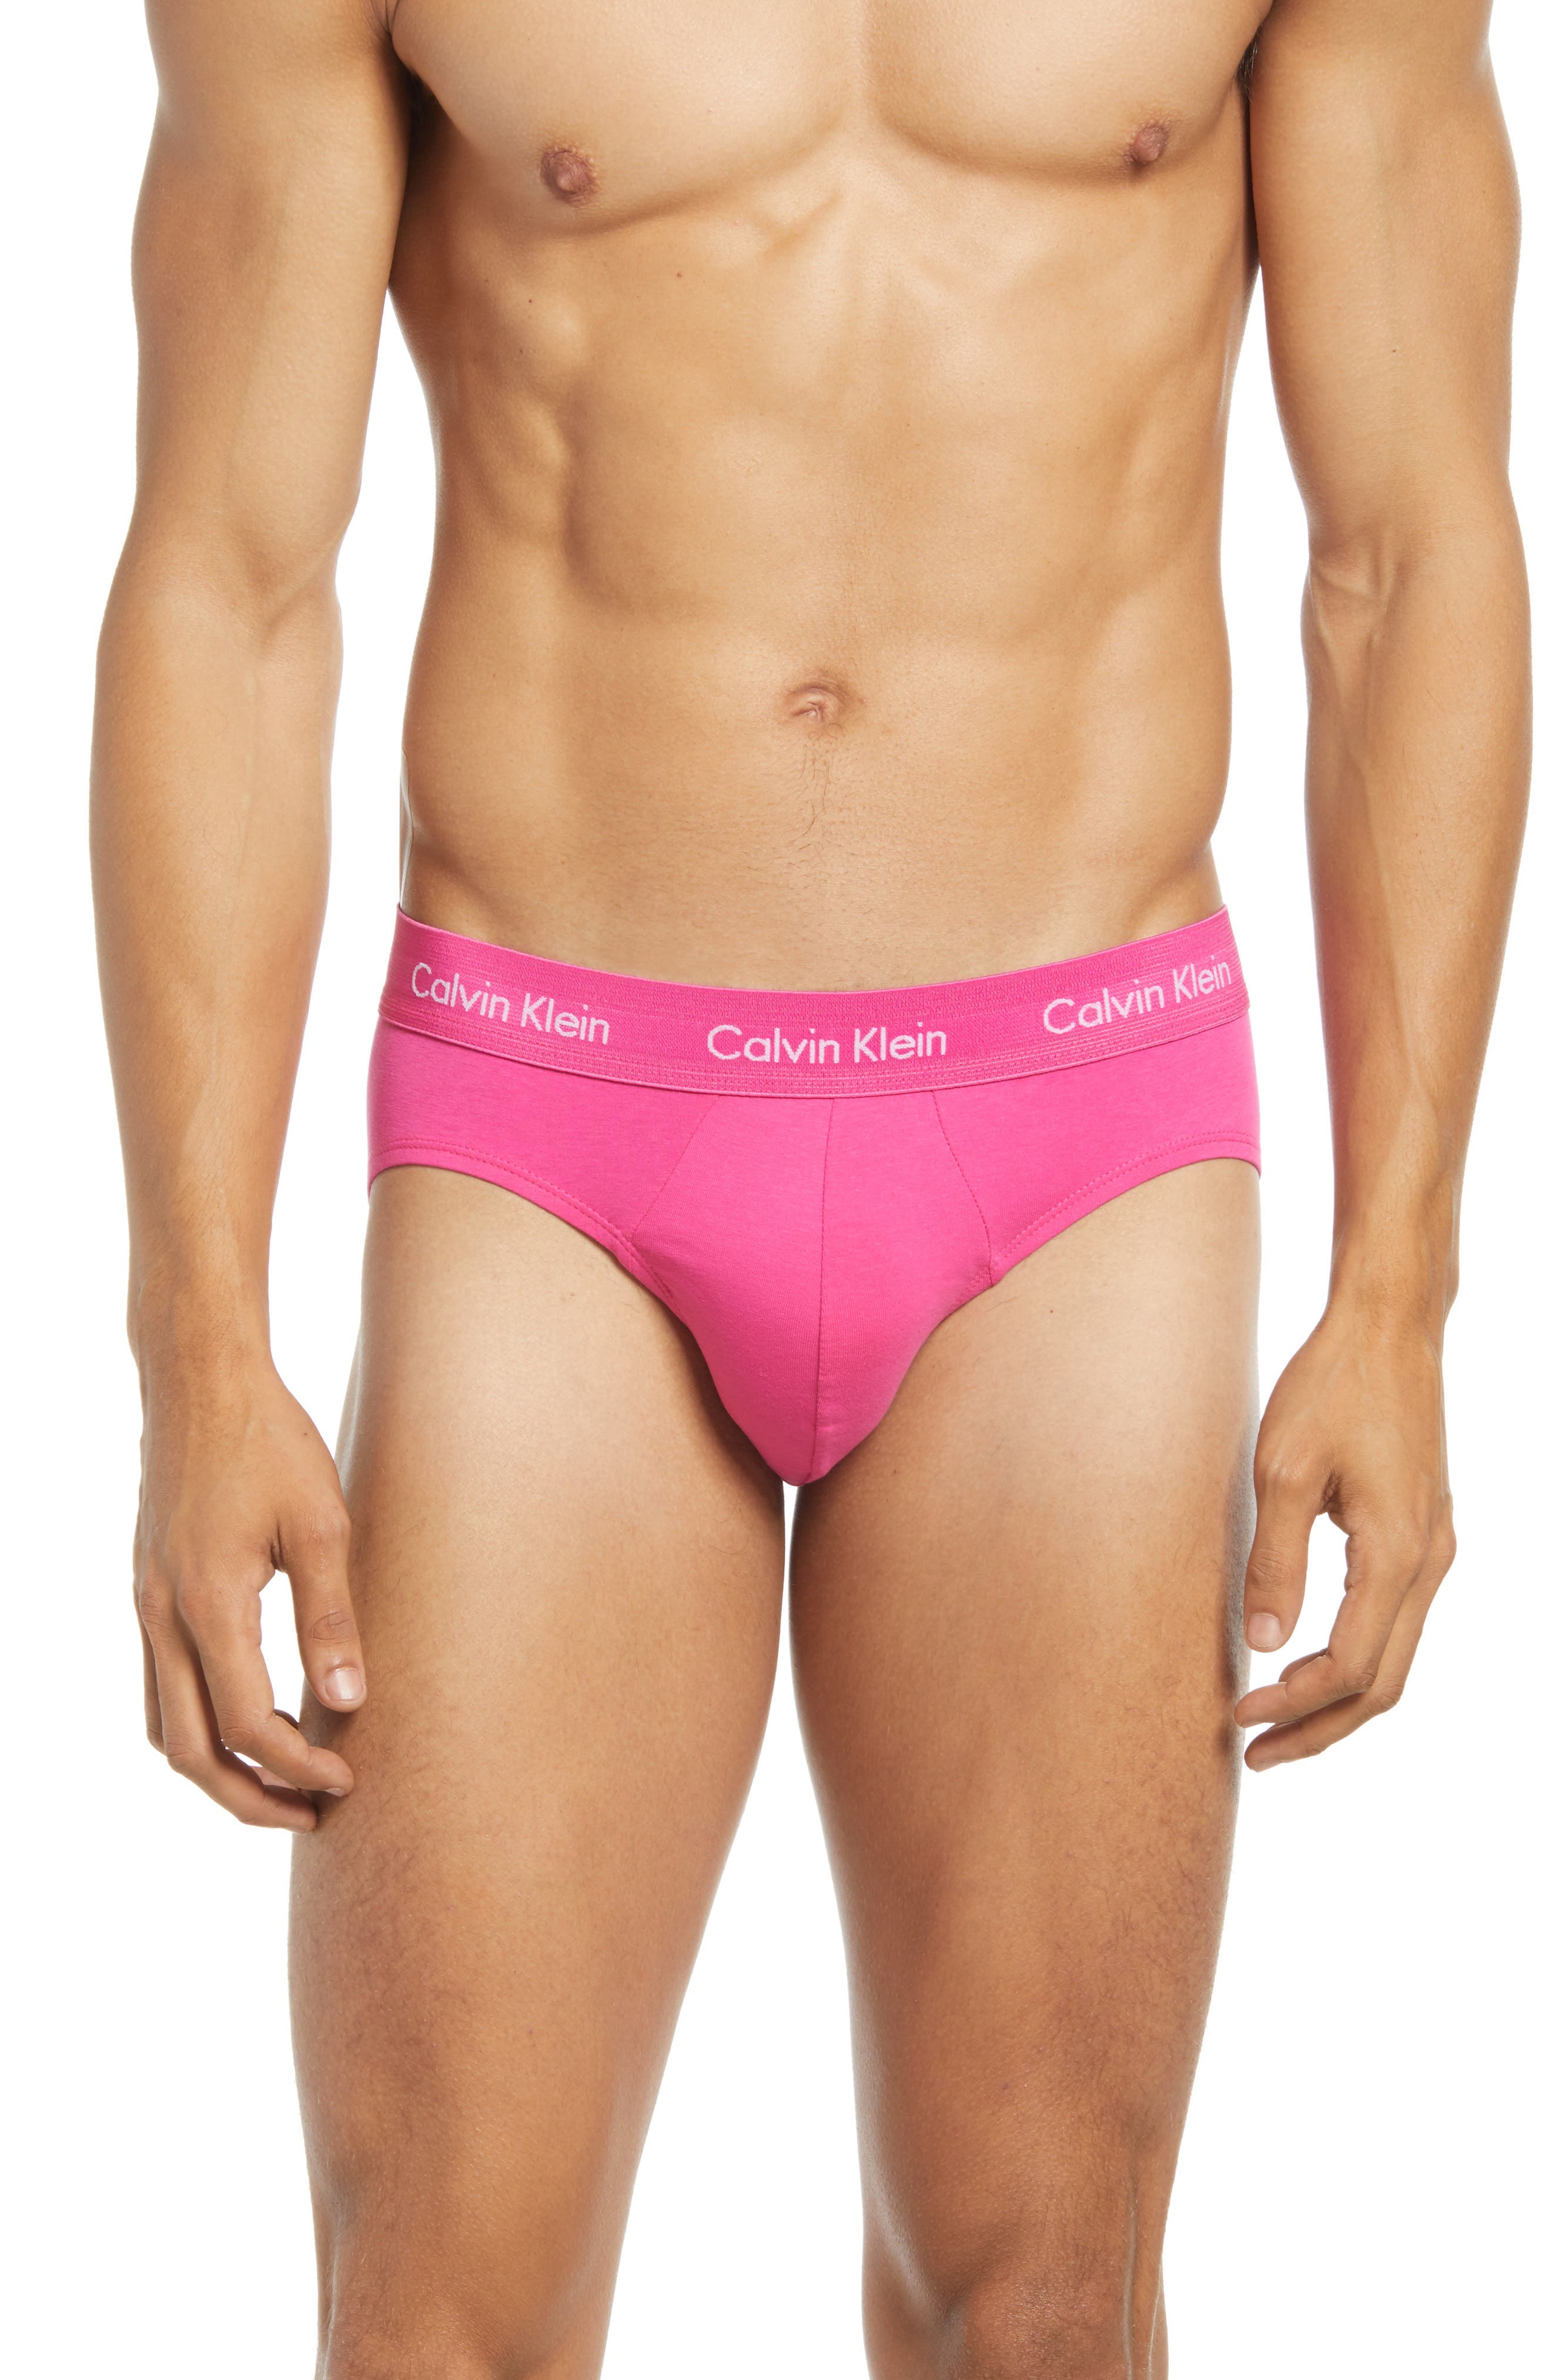 UPC 790812537756 product image for Men's Calvin Klein Assorted 5-Pack Pride Edit Briefs, Size X-Large - Pink | upcitemdb.com